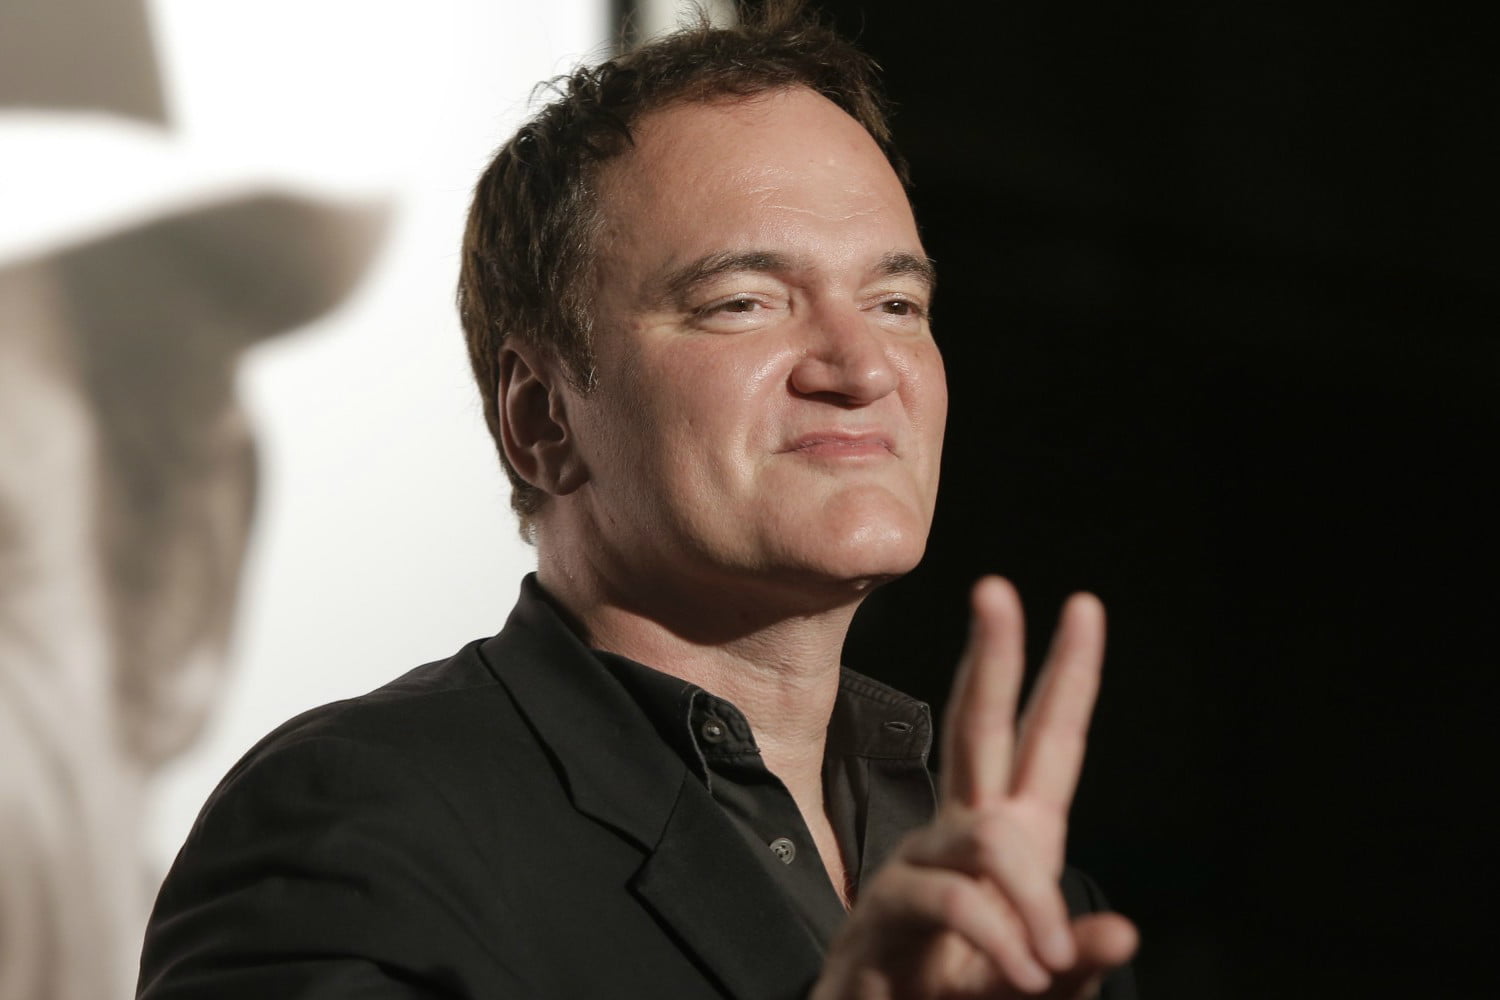 Justified Tarantino